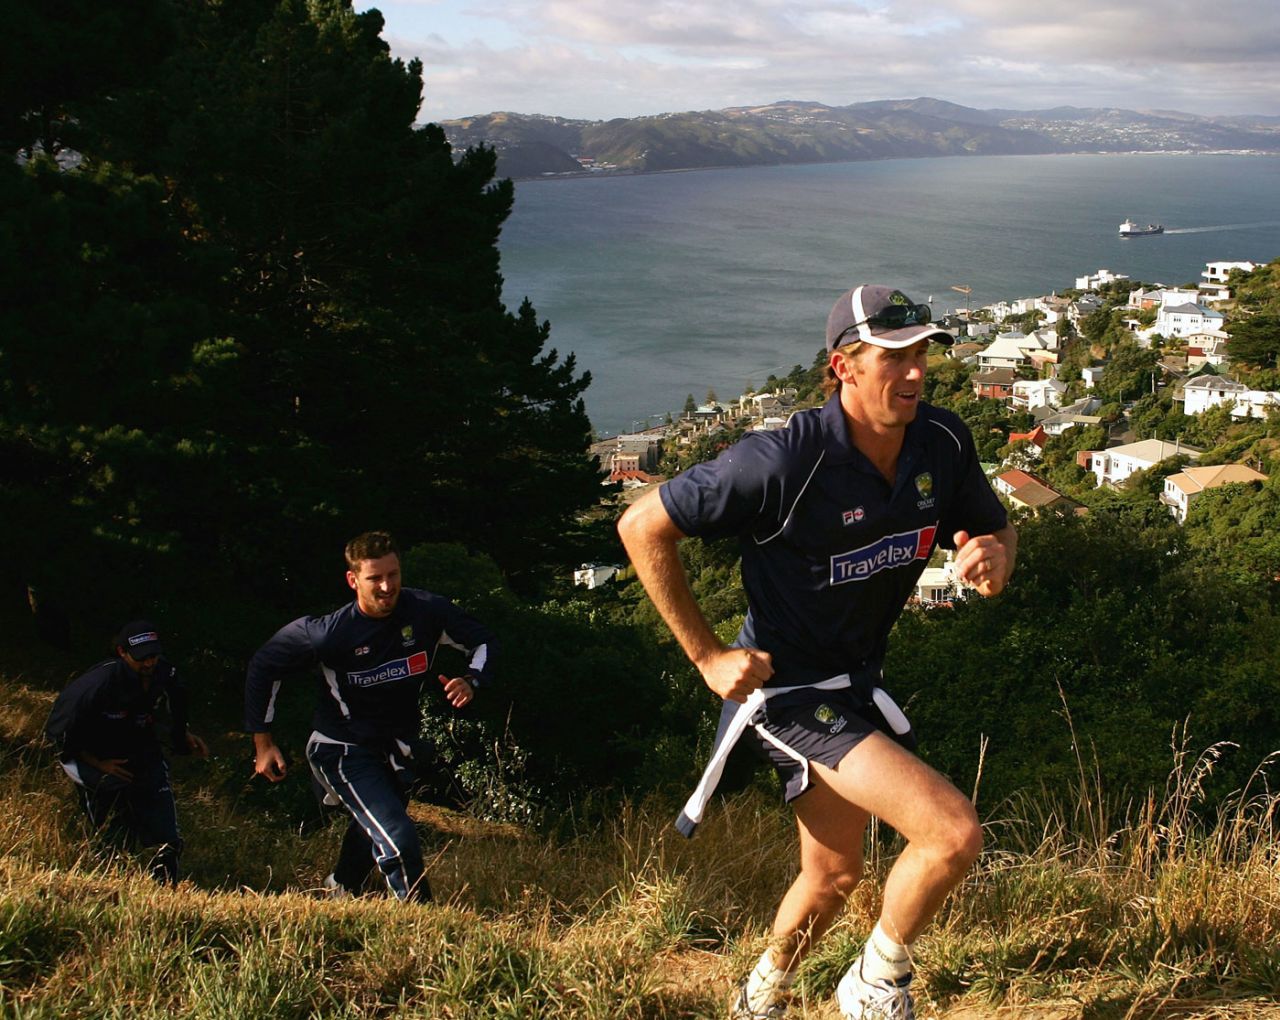 Glenn McGrath, Michael Kasprowicz and Jason Gillespie climb Mount Victoria in Wellington, March 15, 2005